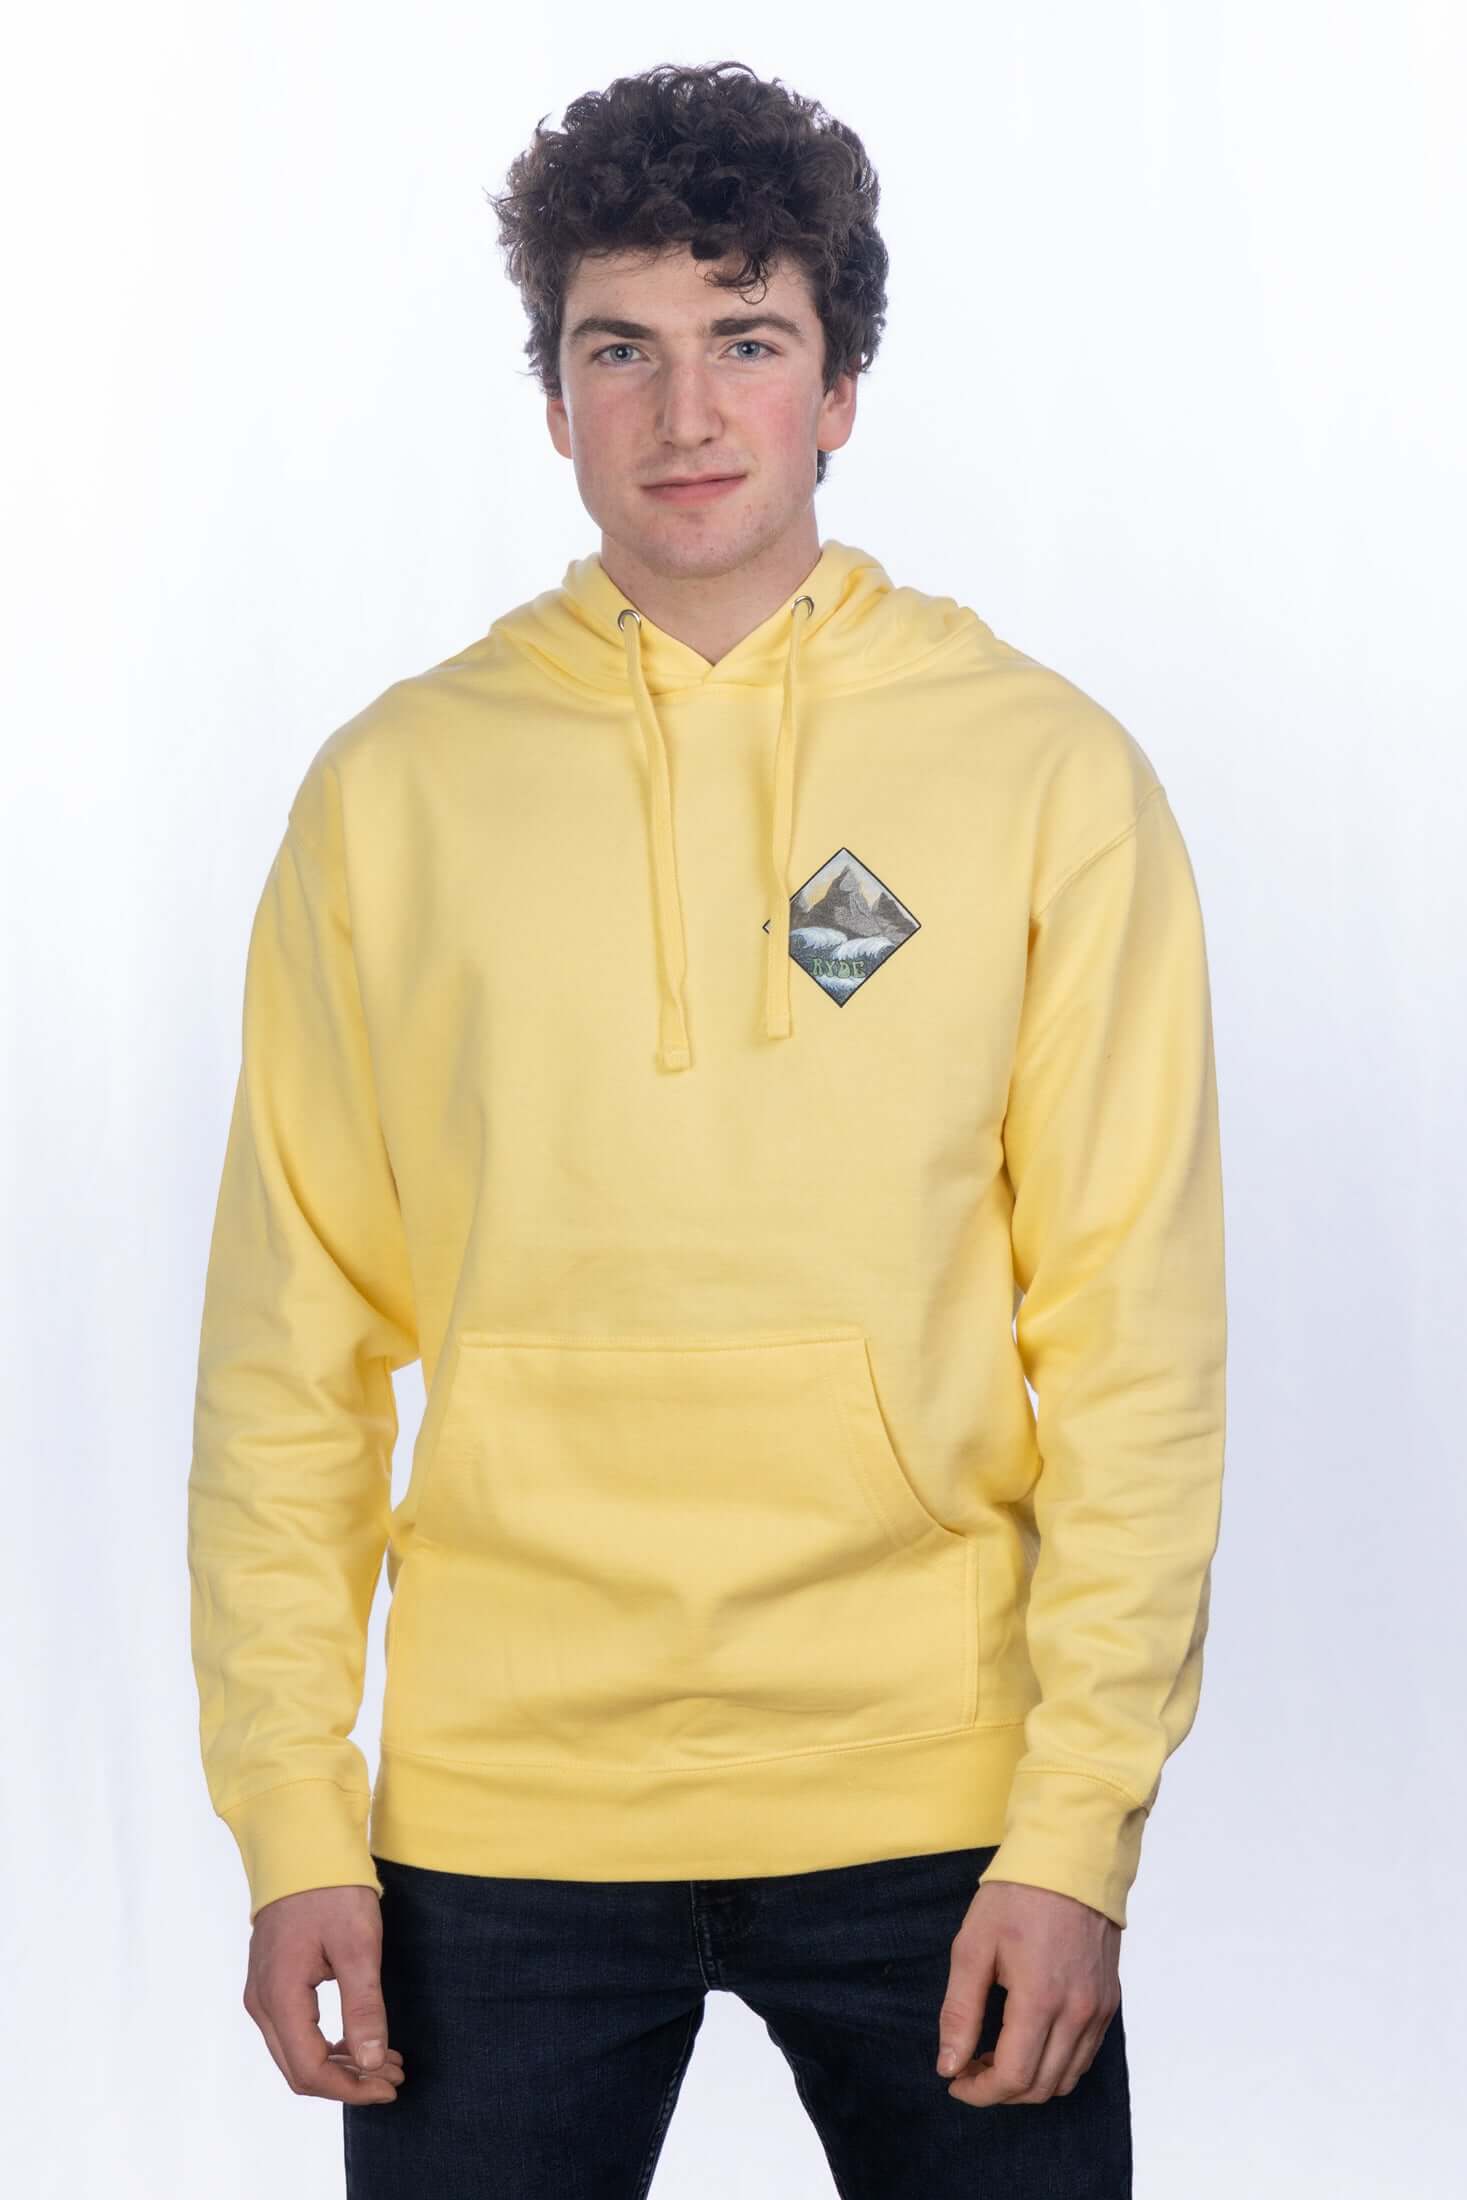 ryde 4 lyfe - Free Flow Hooded Sweatshirt - yellow - front